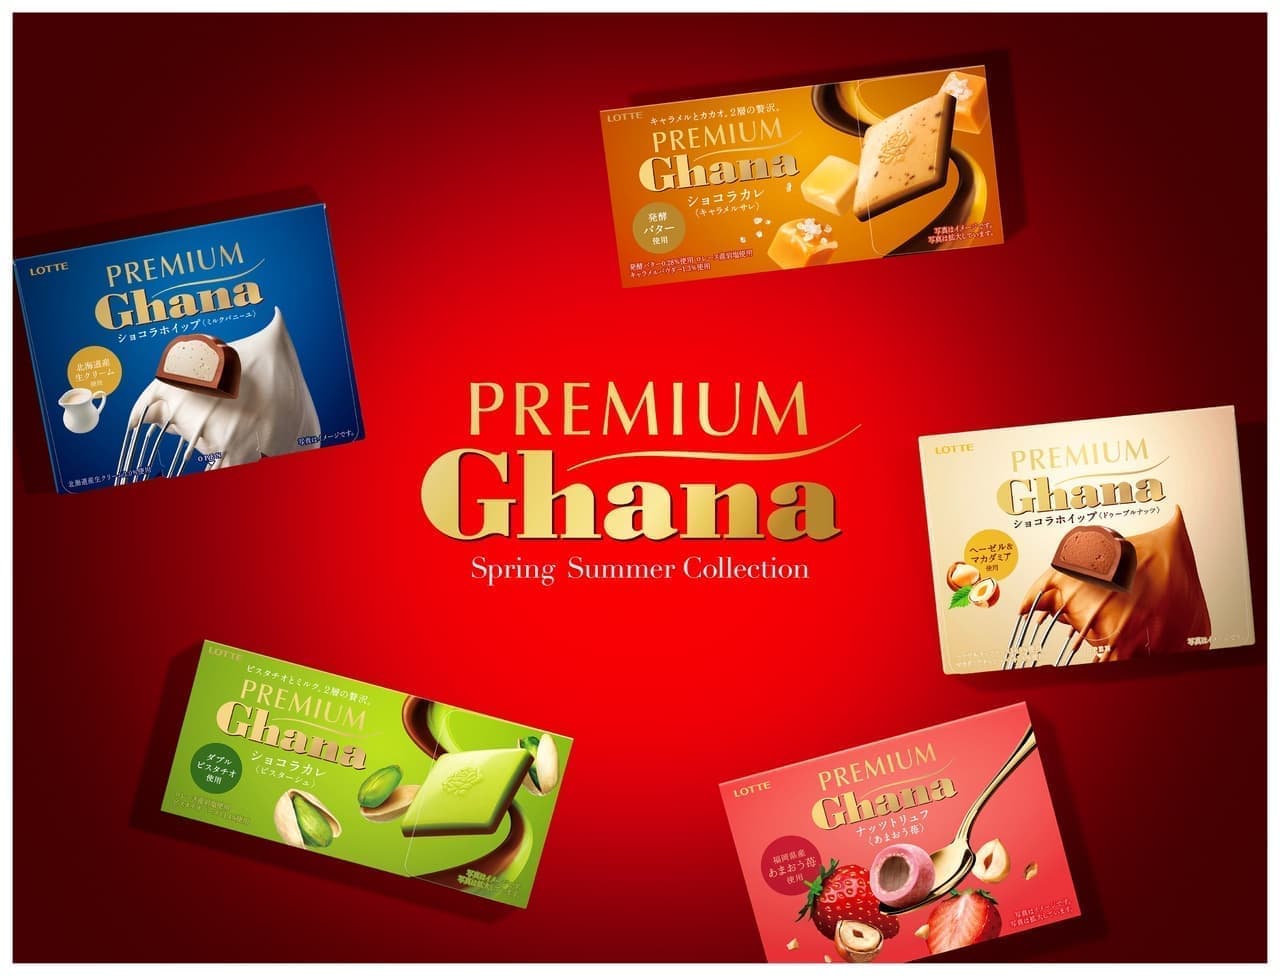 Lotte "Premium Ghana" Spring/Summer Flavor